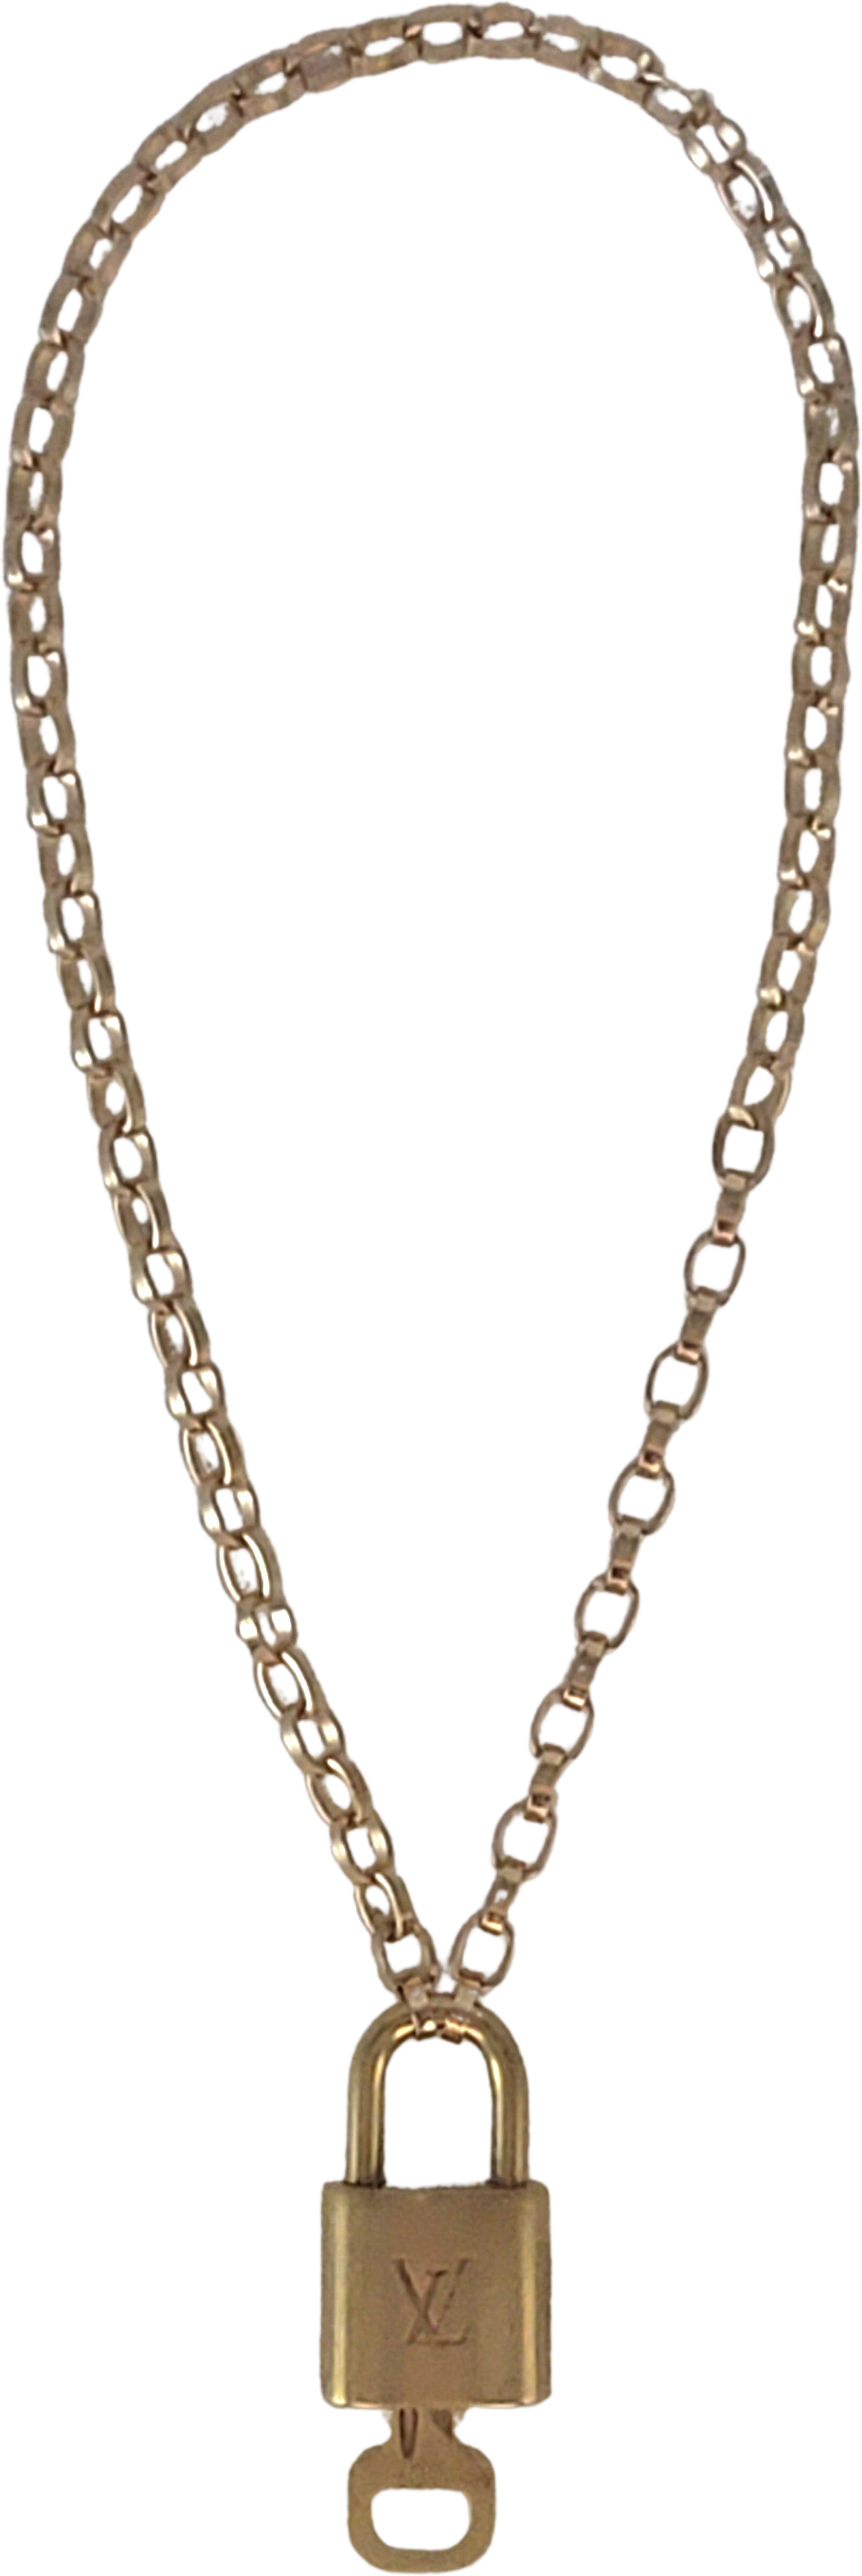 Authentic Louis Vuitton Lock Chain Necklace for Him